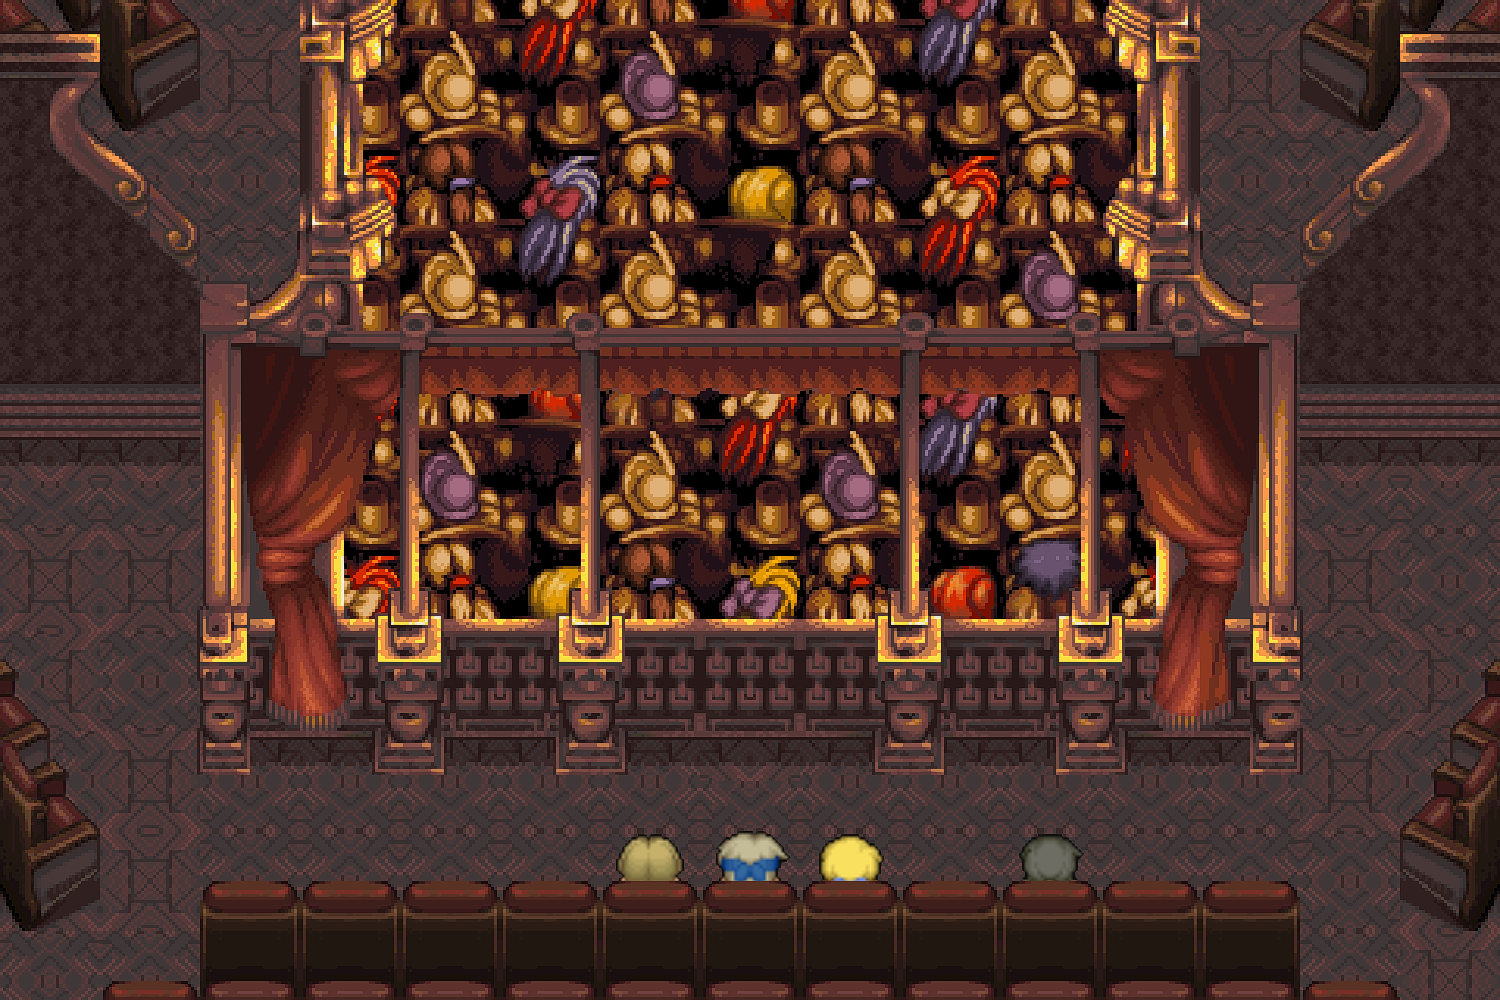 Final Fantasy VI Opera House